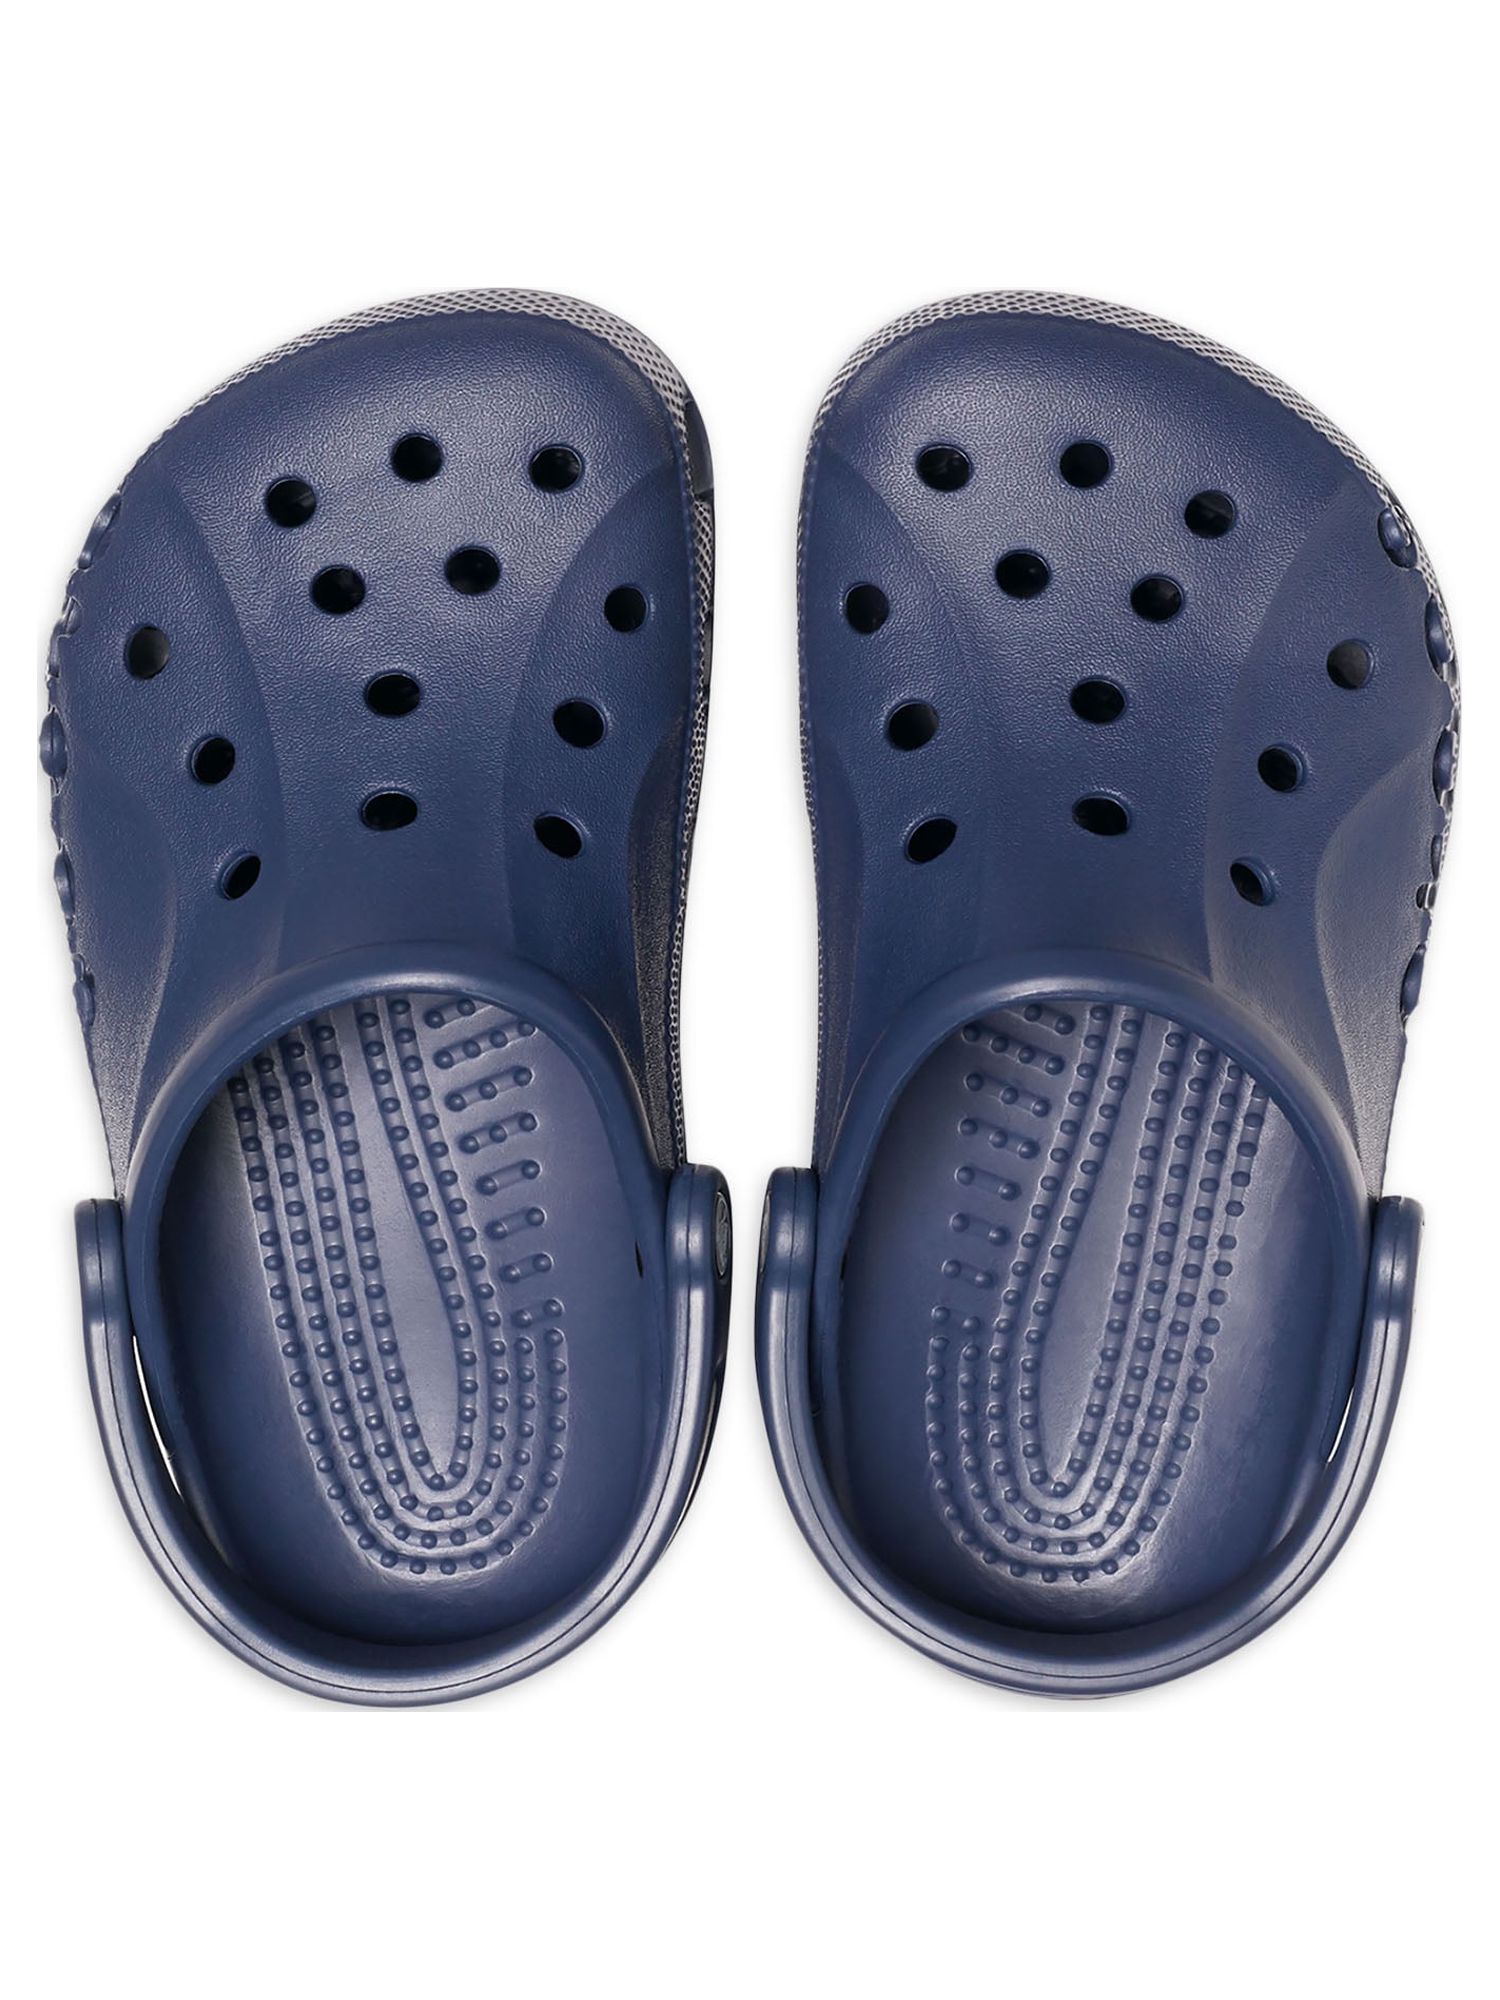 Crocs Men's and Women's Unisex Baya Clog Sandals - image 5 of 6